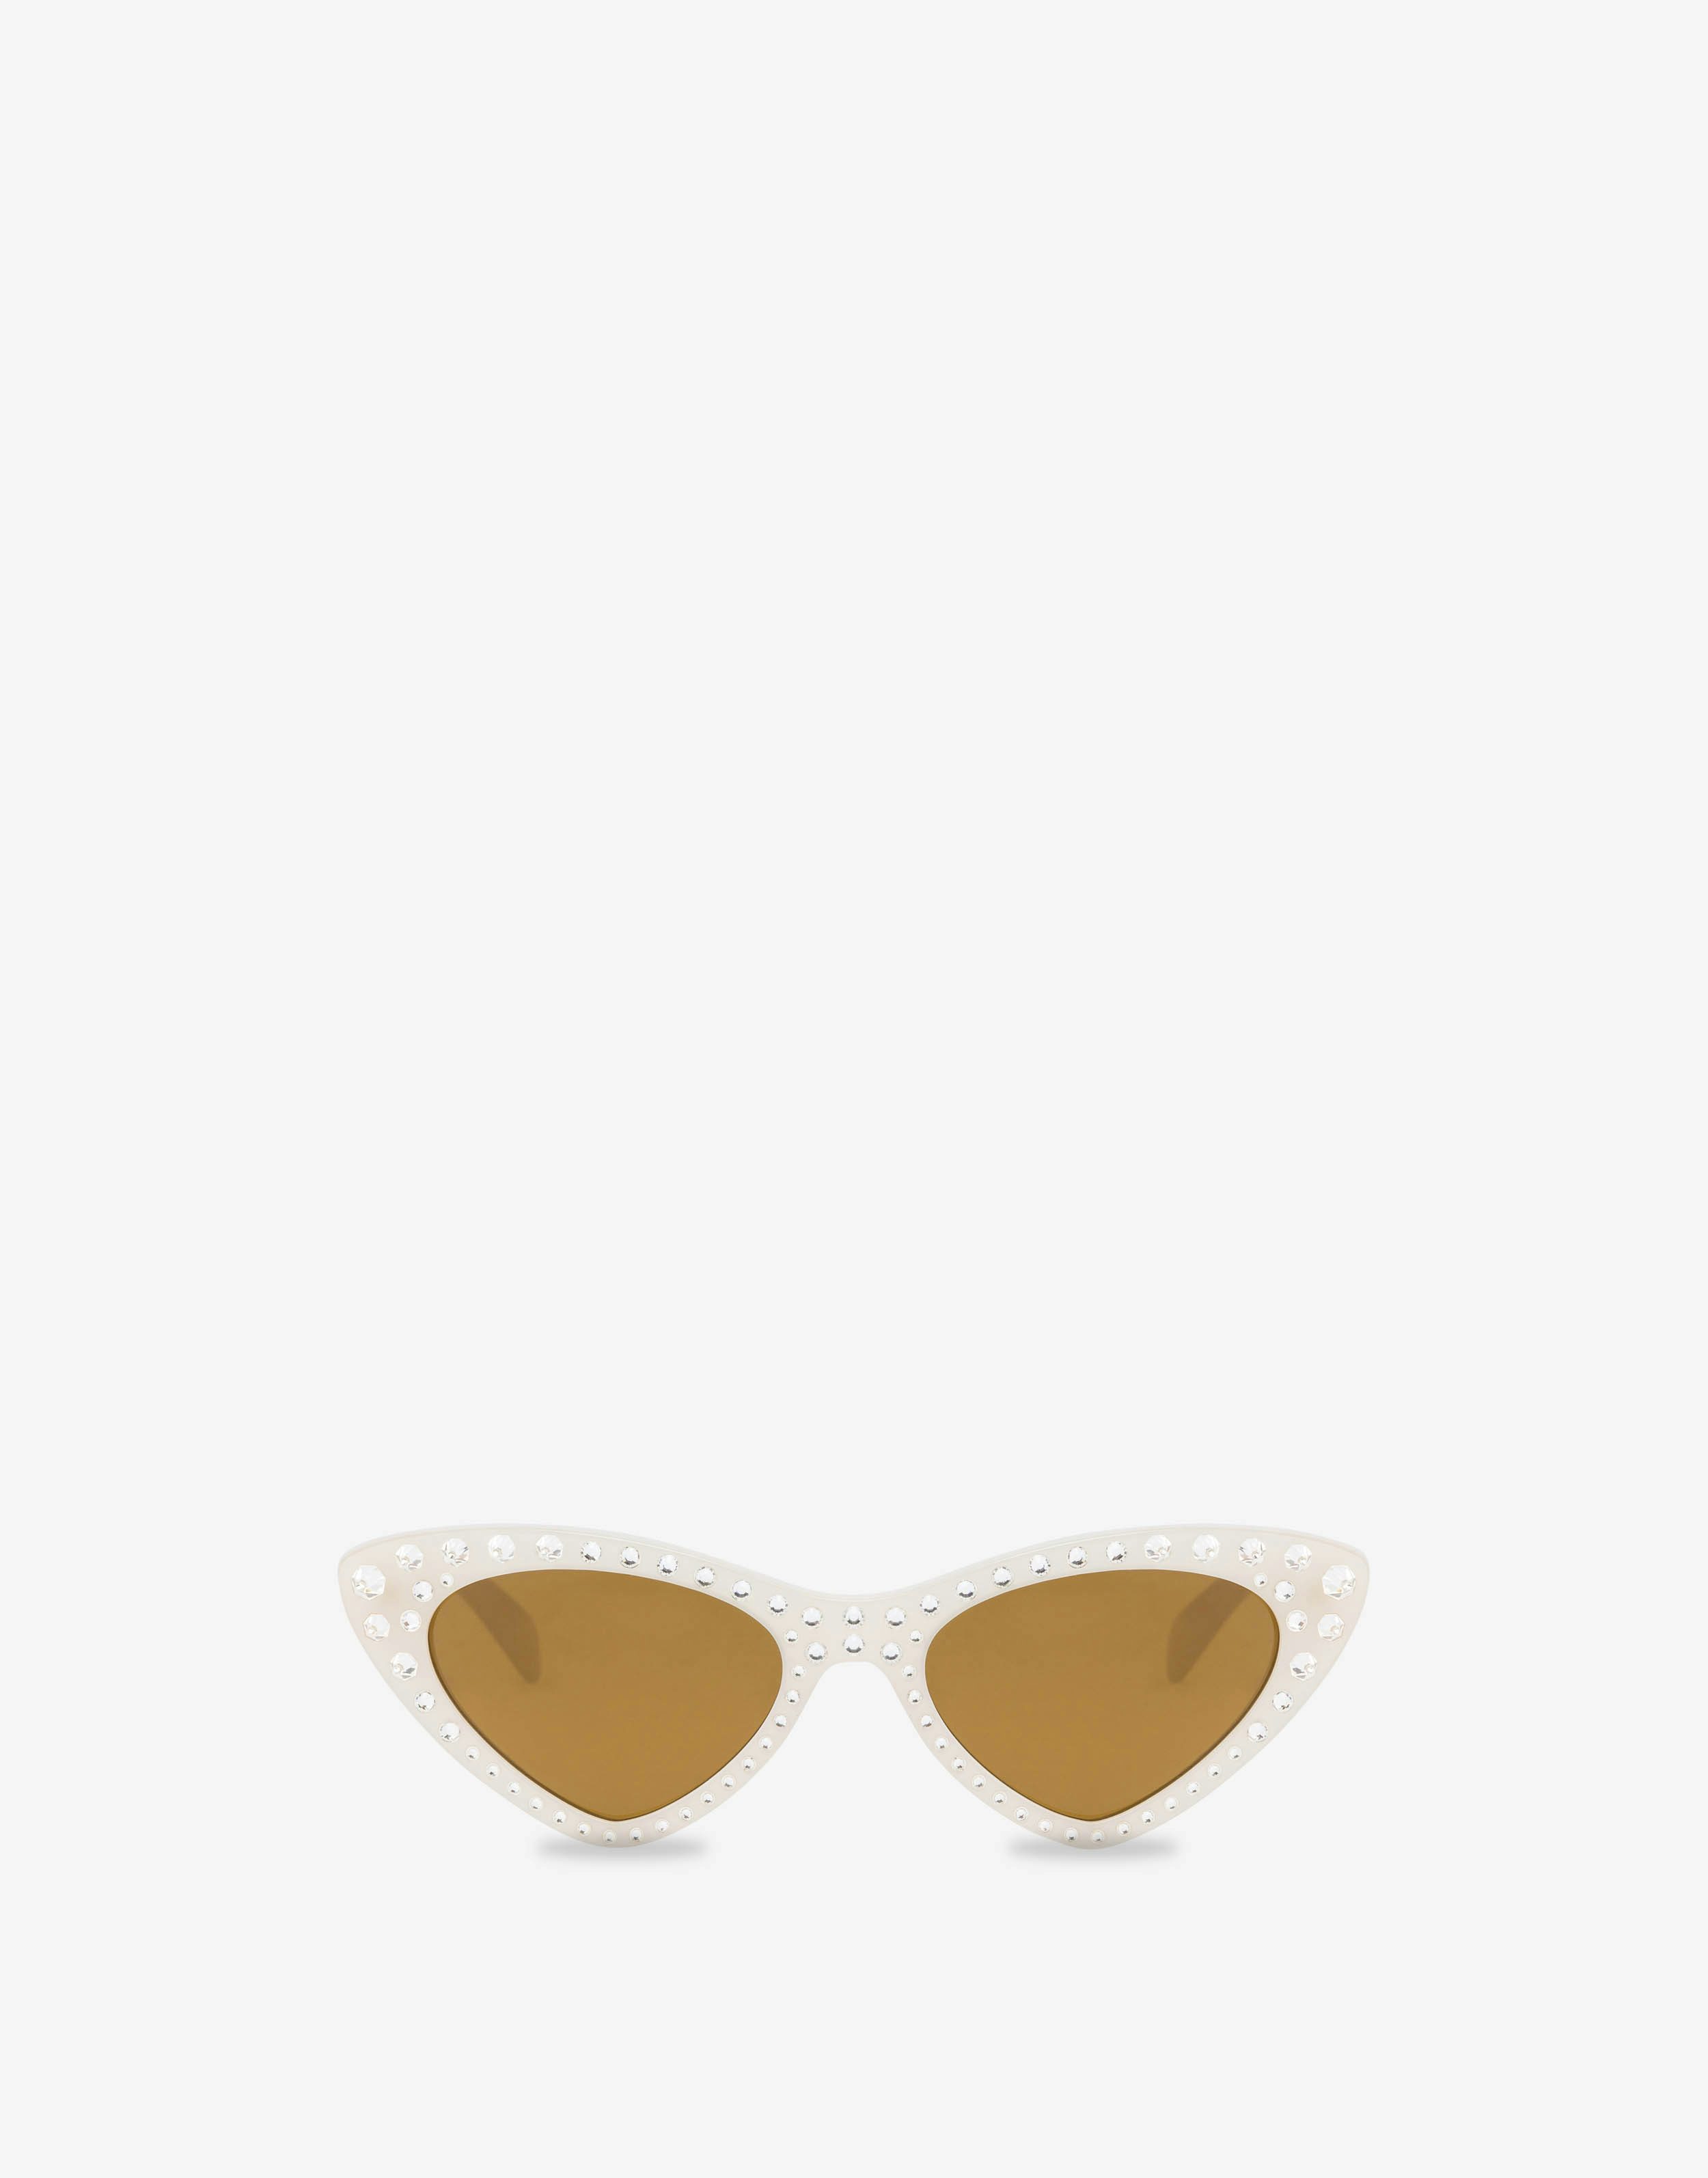 Cat eye sunglasses with rhinestones